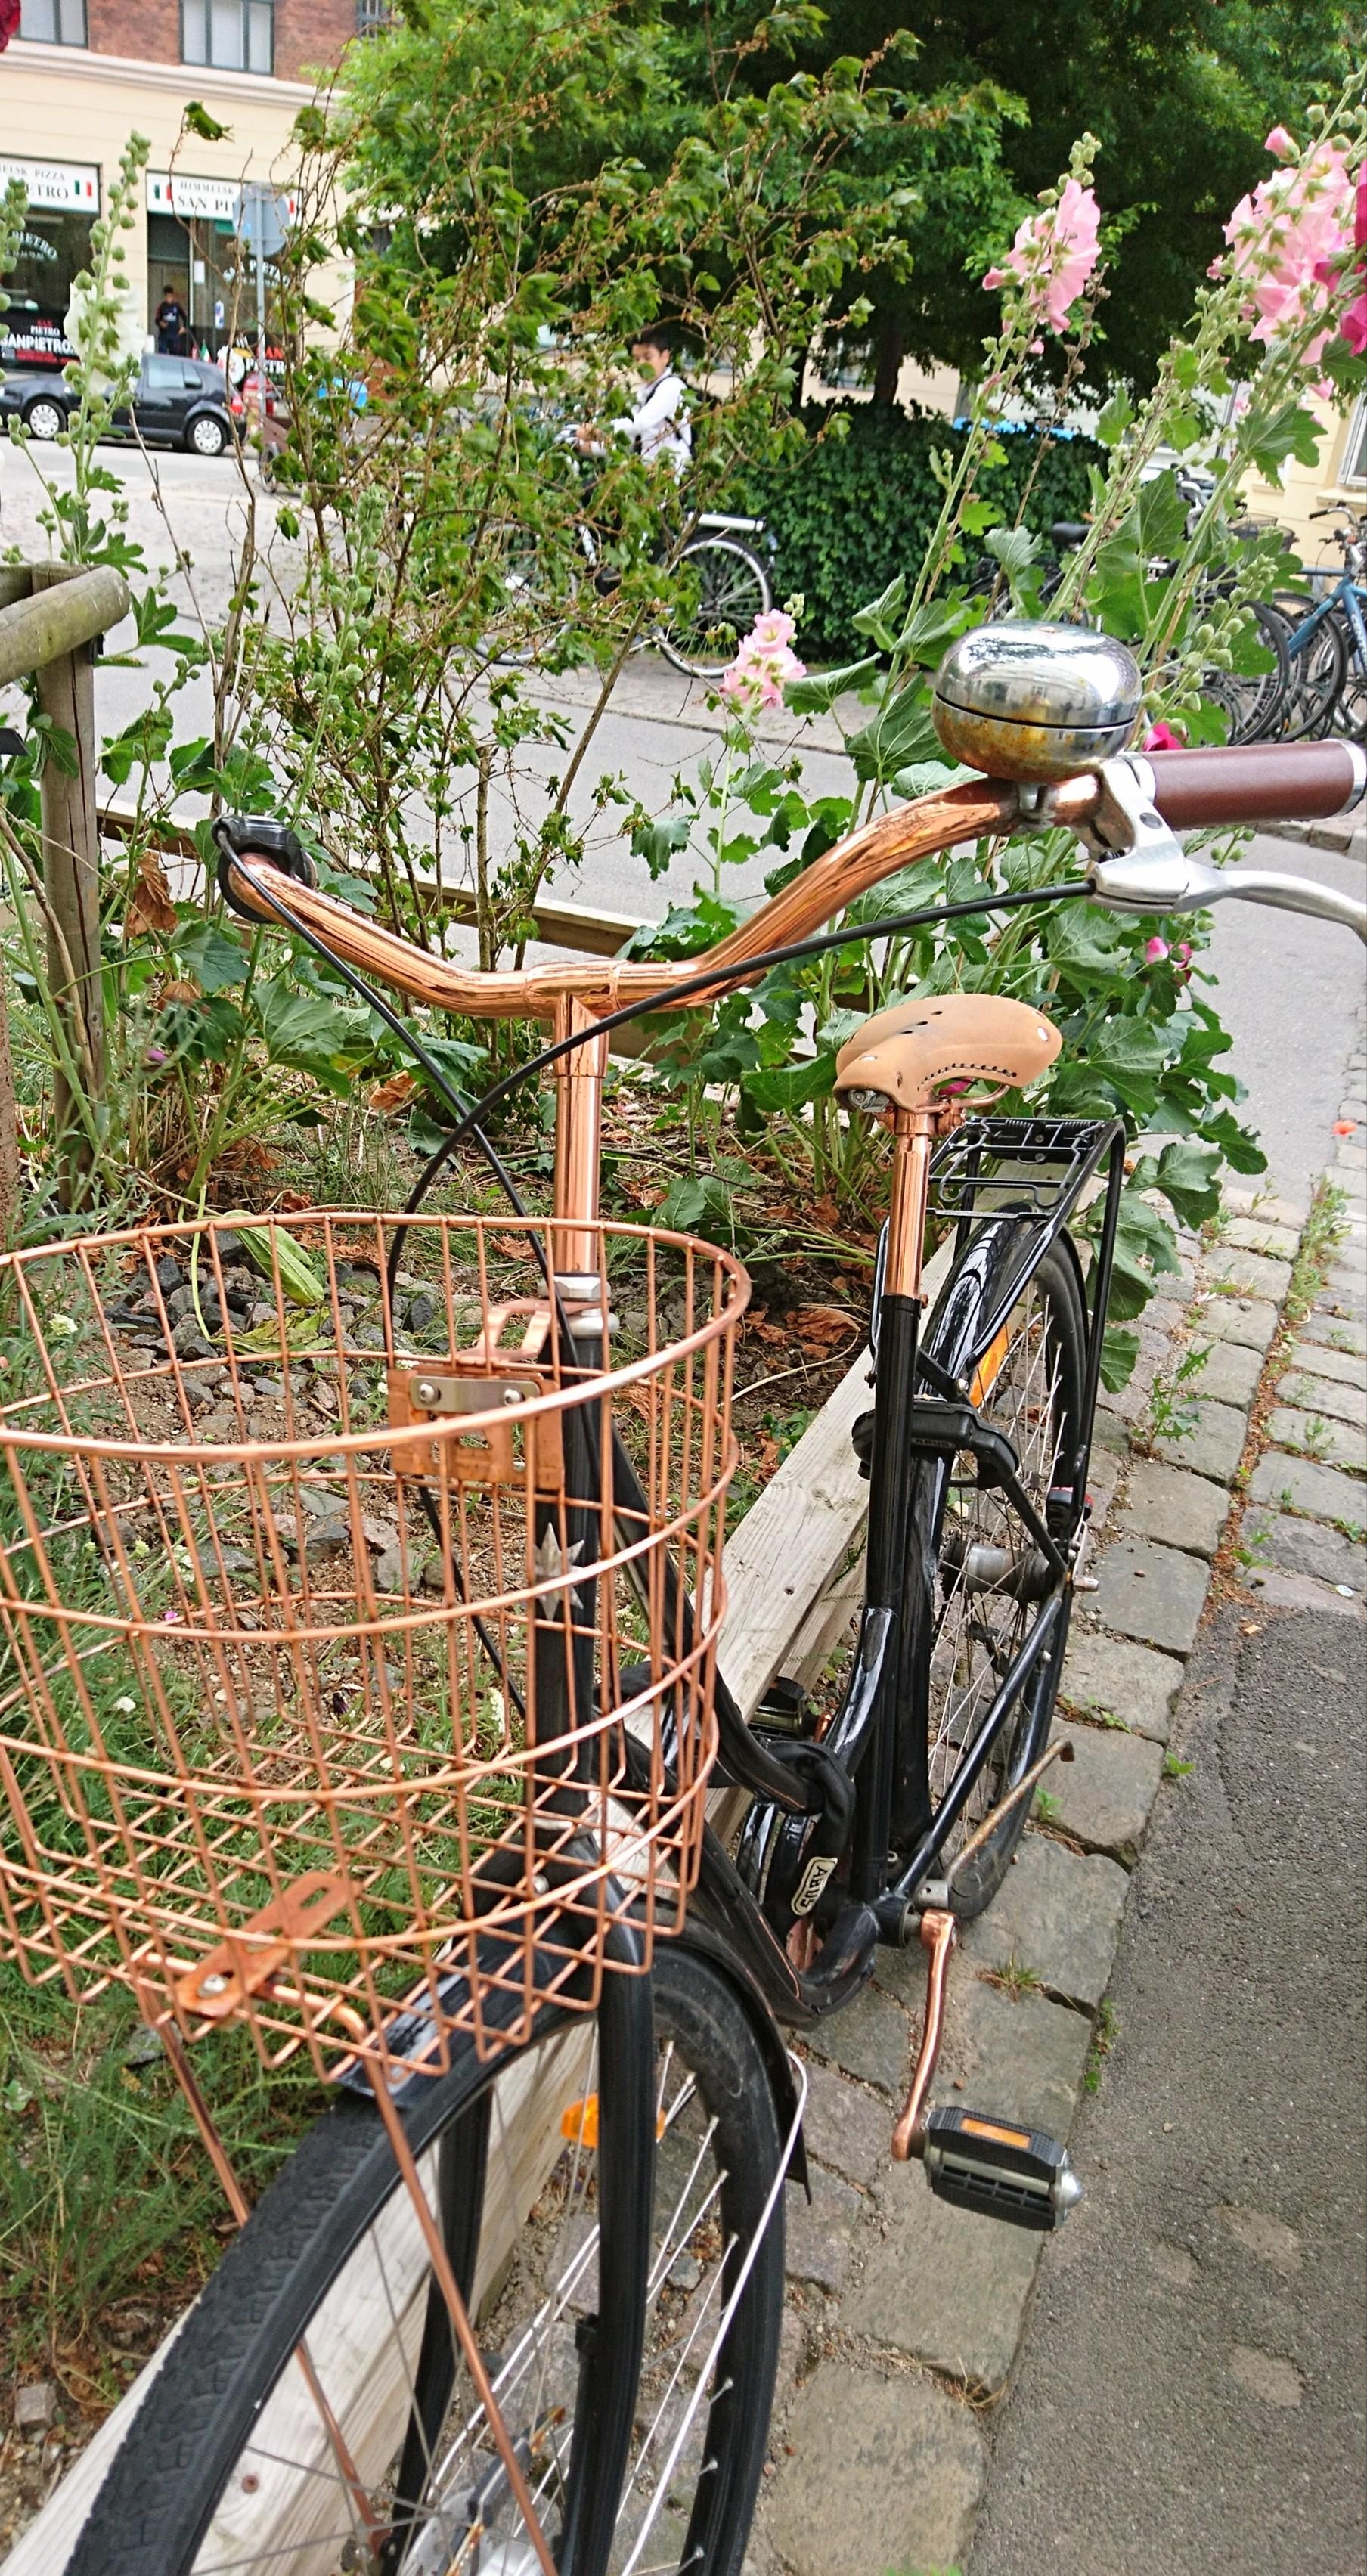 Bikecity #Kopenhagen
#kupfermetallic_love